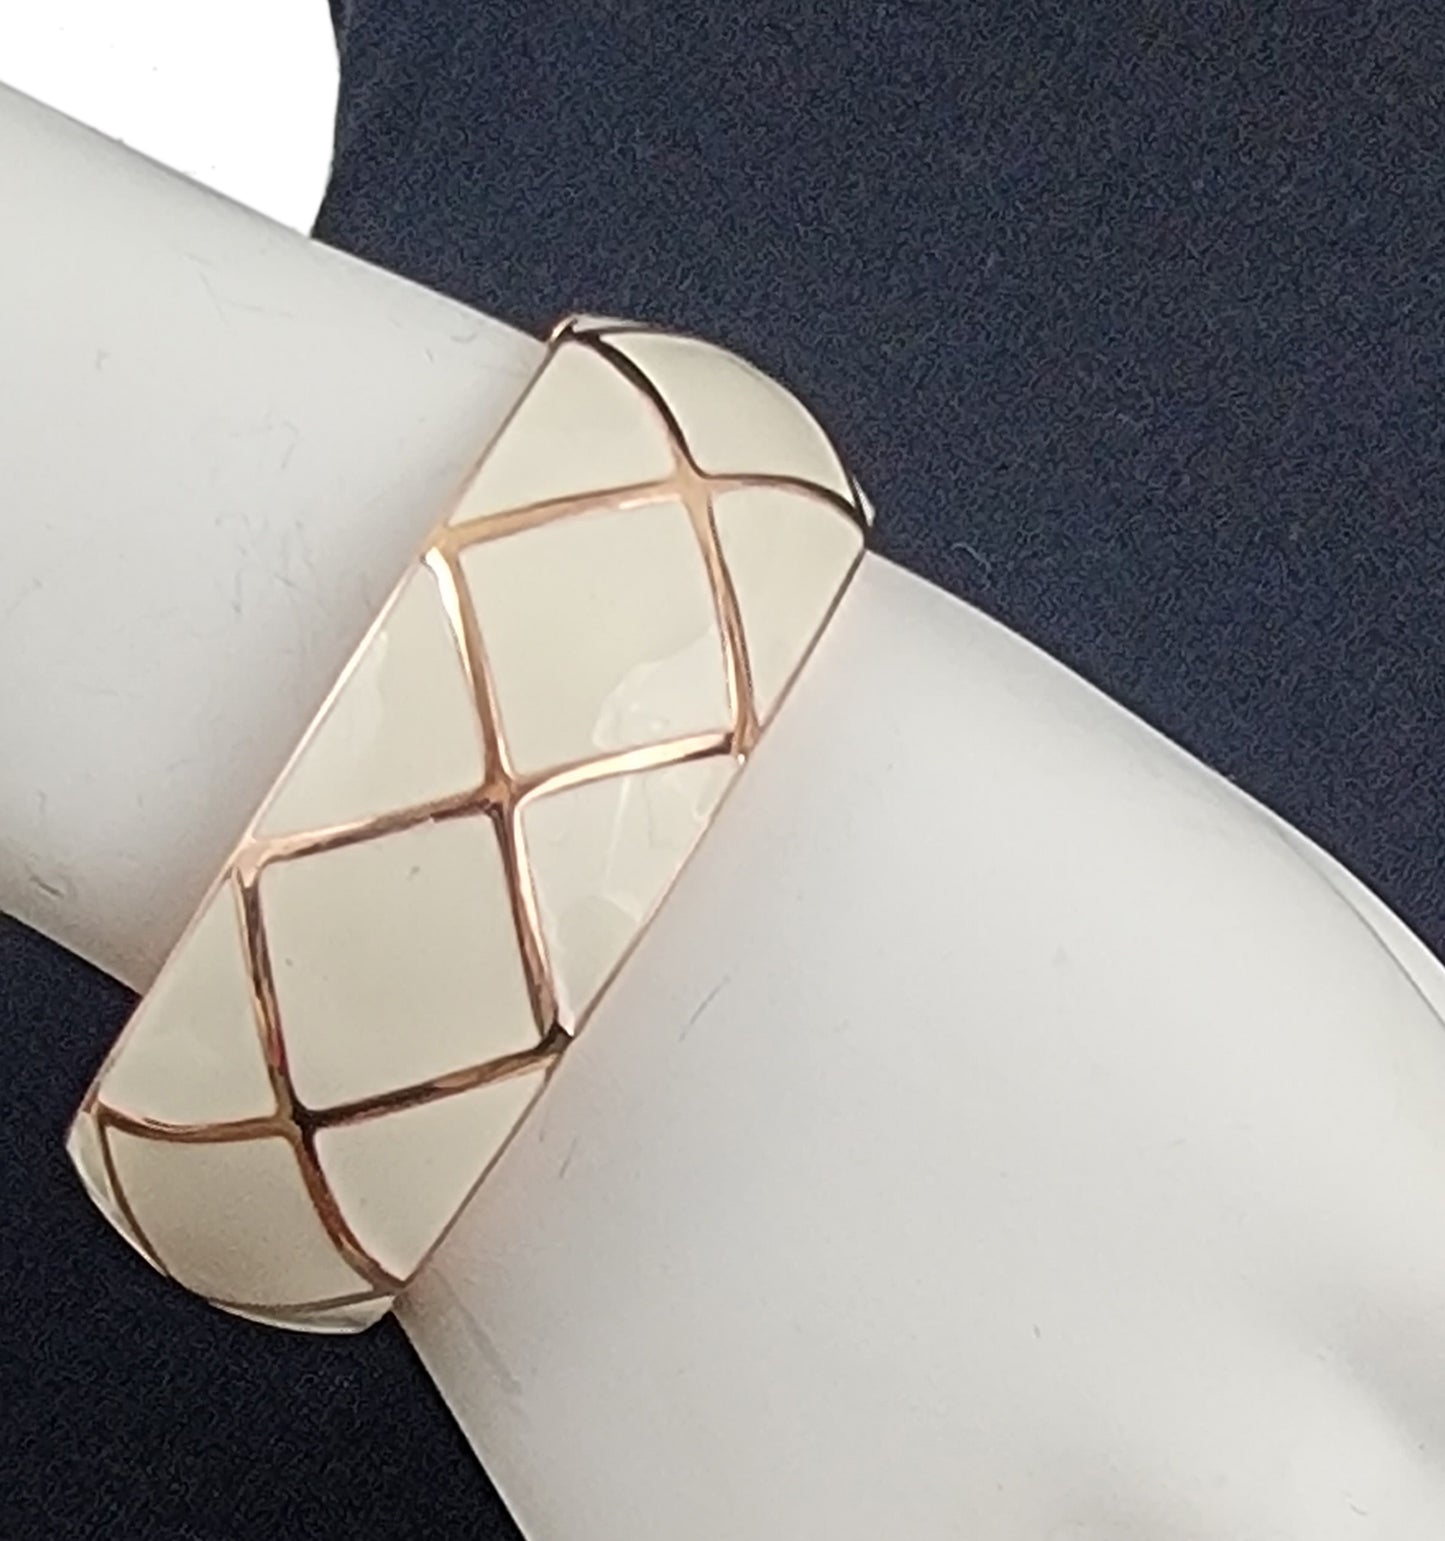 Premier Designs Rose Gold Tone White Enamel Hinged Bangle Bracelet Cuff NWOT